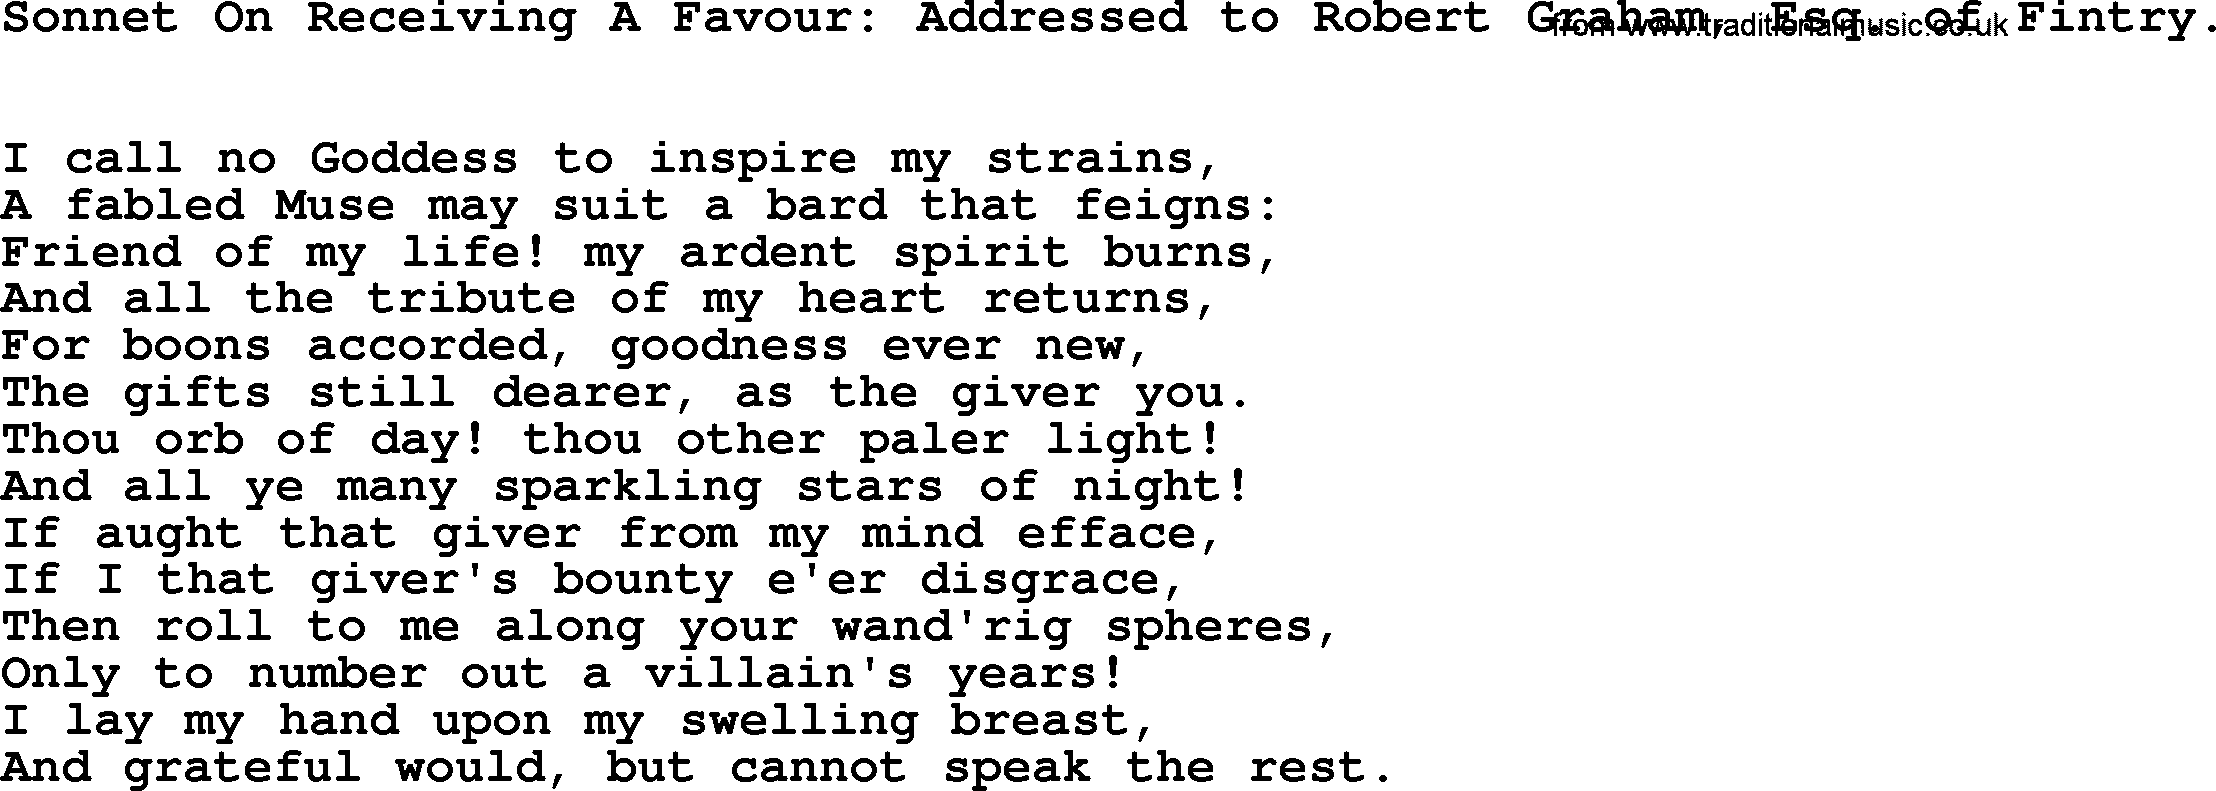 Robert Burns Songs & Lyrics: Sonnet On Receiving A Favour Addressed To Robert Graham, Esq. Of Fintry.